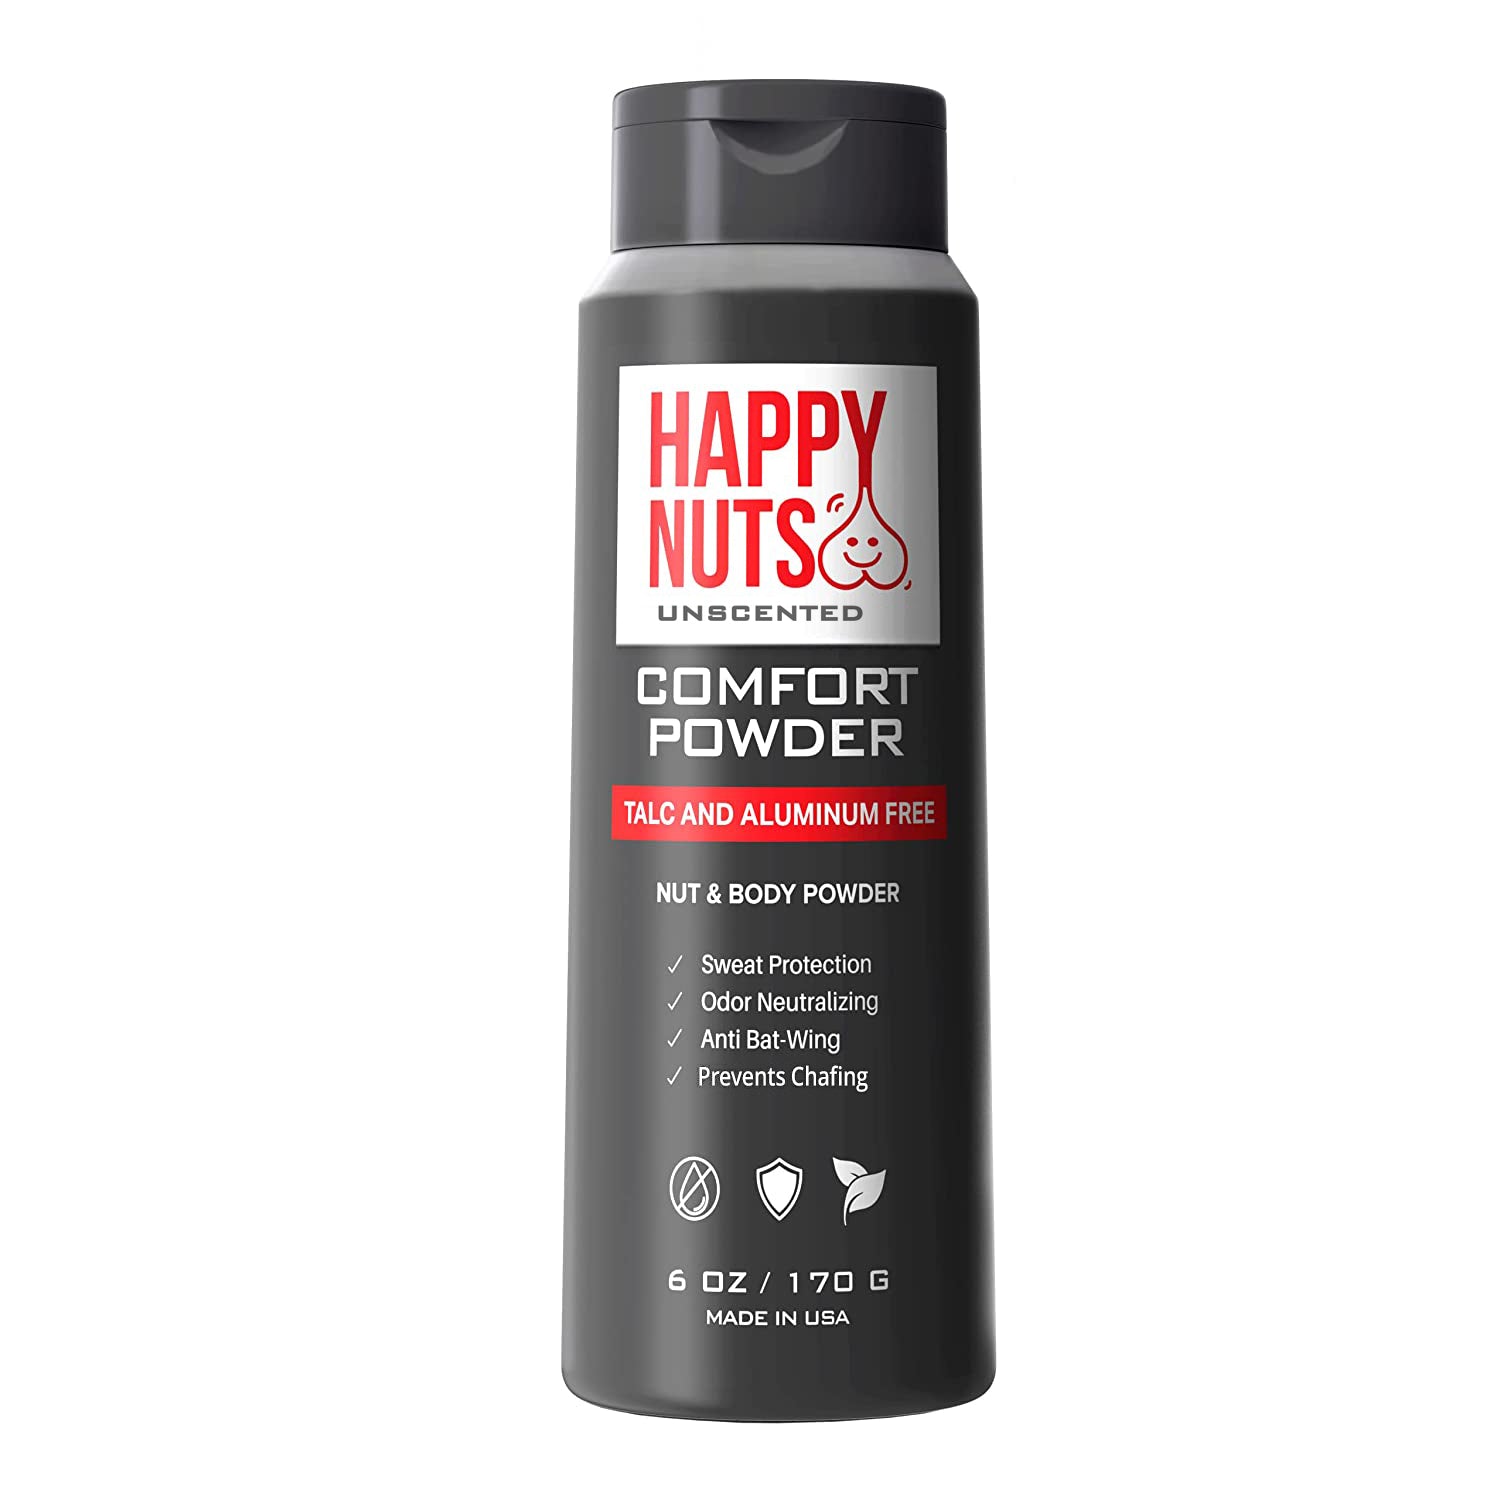 Happy Nuts Comfort Powder, Deodorizing, Anti-Chafing Body Powder for Men, Natural, Vegan, Unscented, 6 oz, Size: 6 oz / 170 G